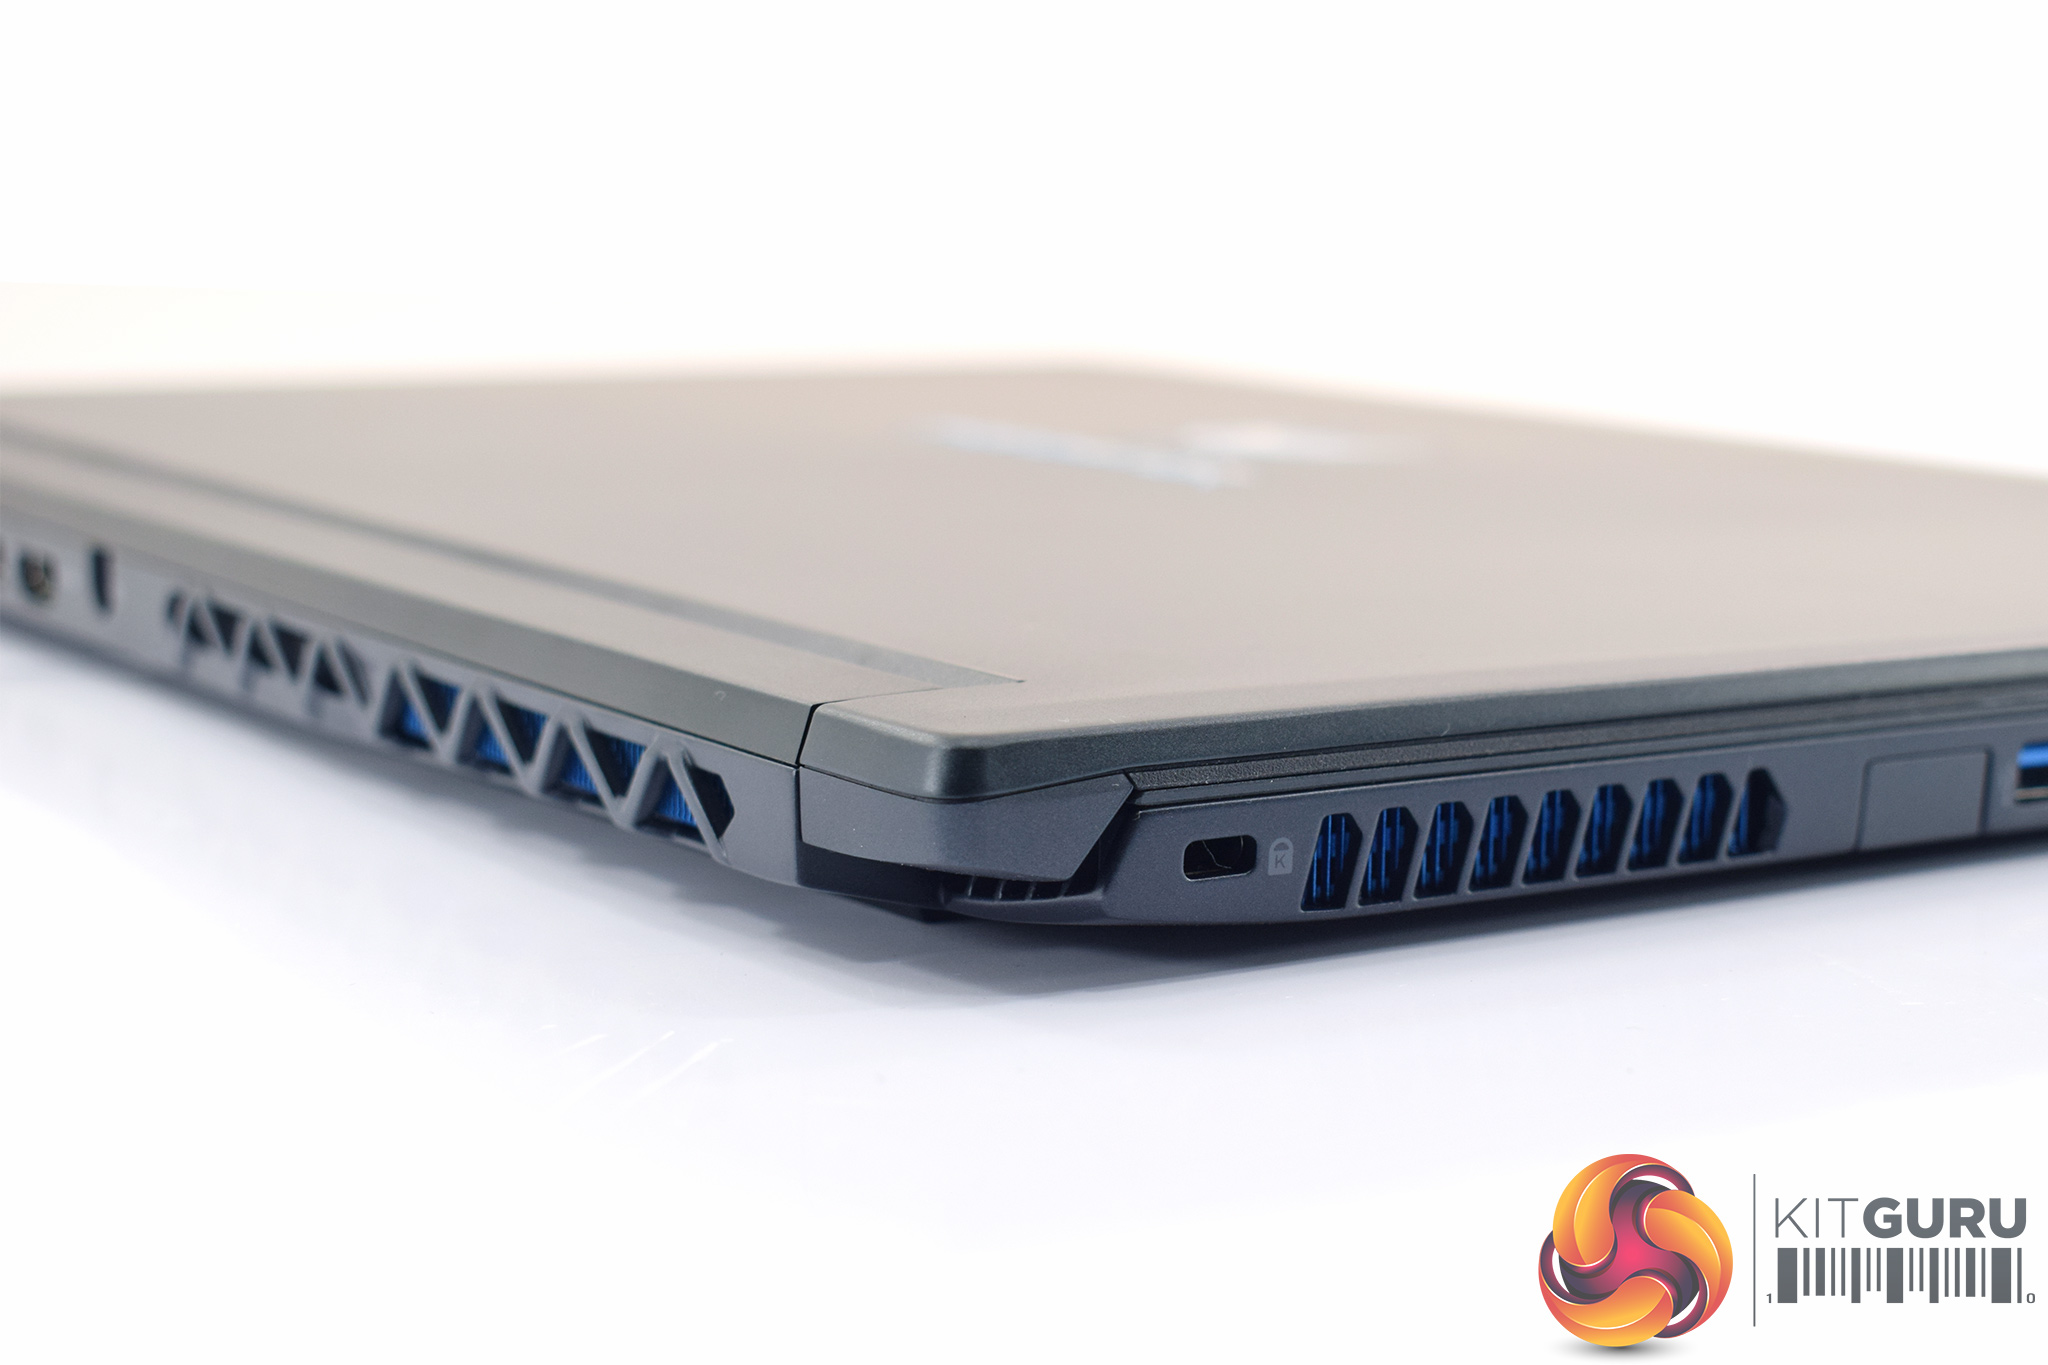 Acer Predator Triton 700 Gaming Laptop Review (Max-Q GTX 1080) | KitGuru